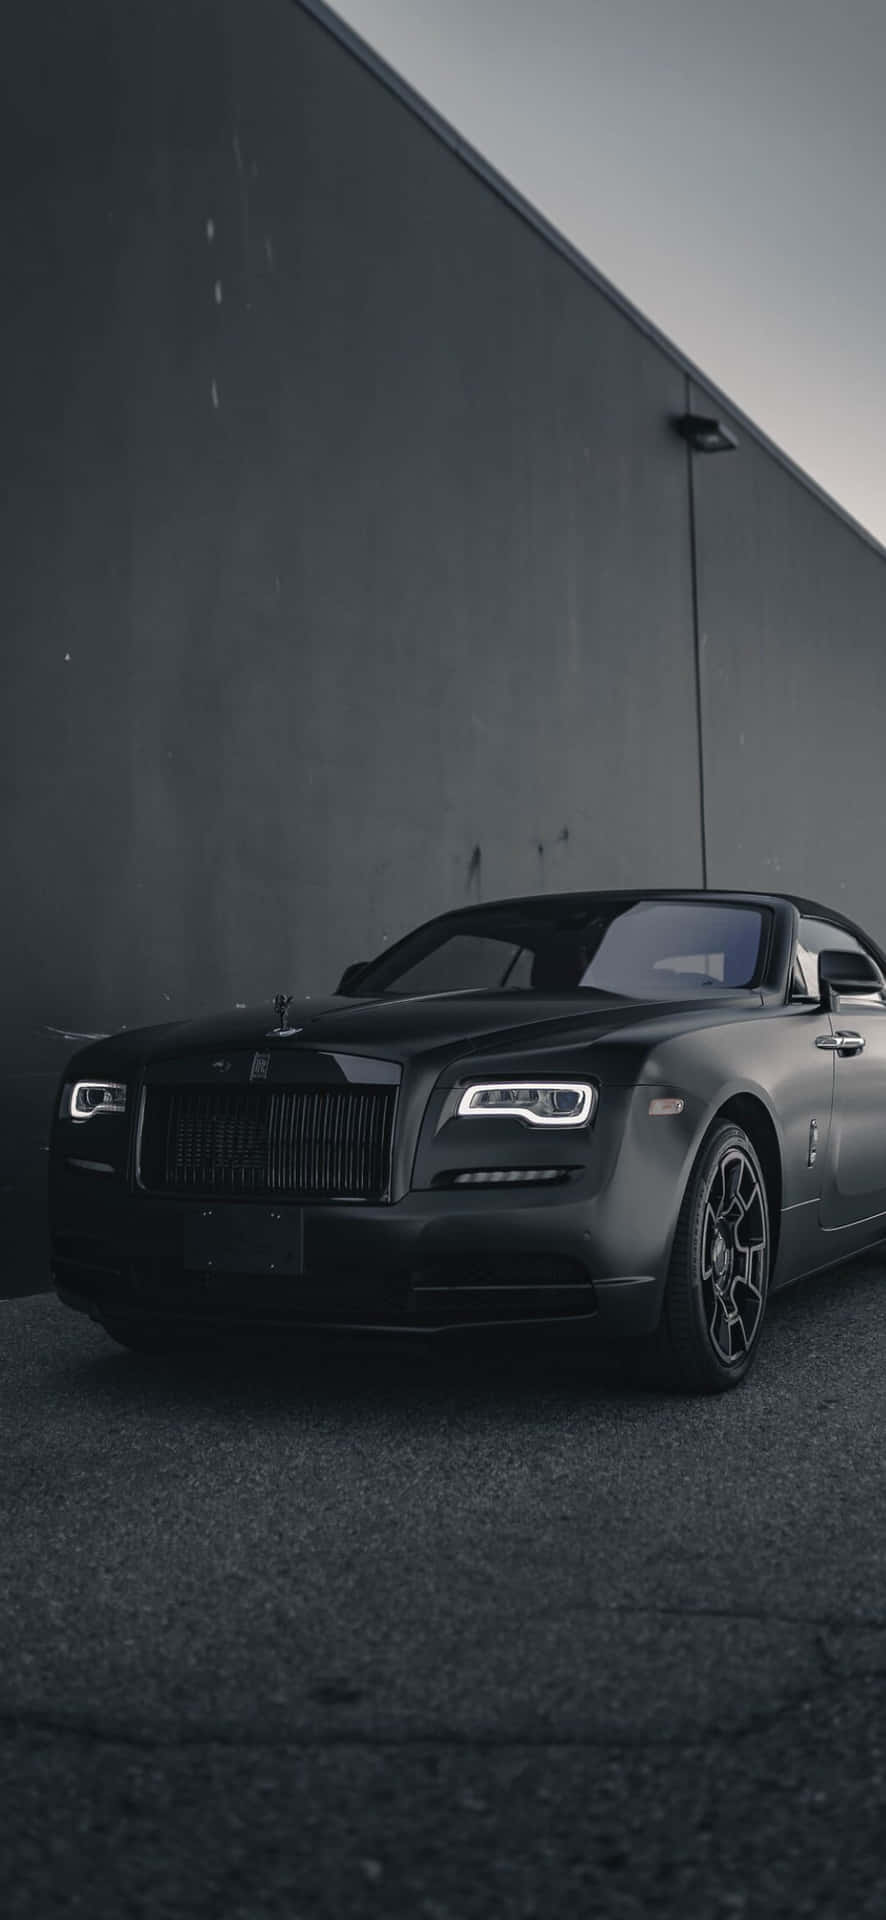 Caption: Elegance Personified - The Rolls Royce Phantom